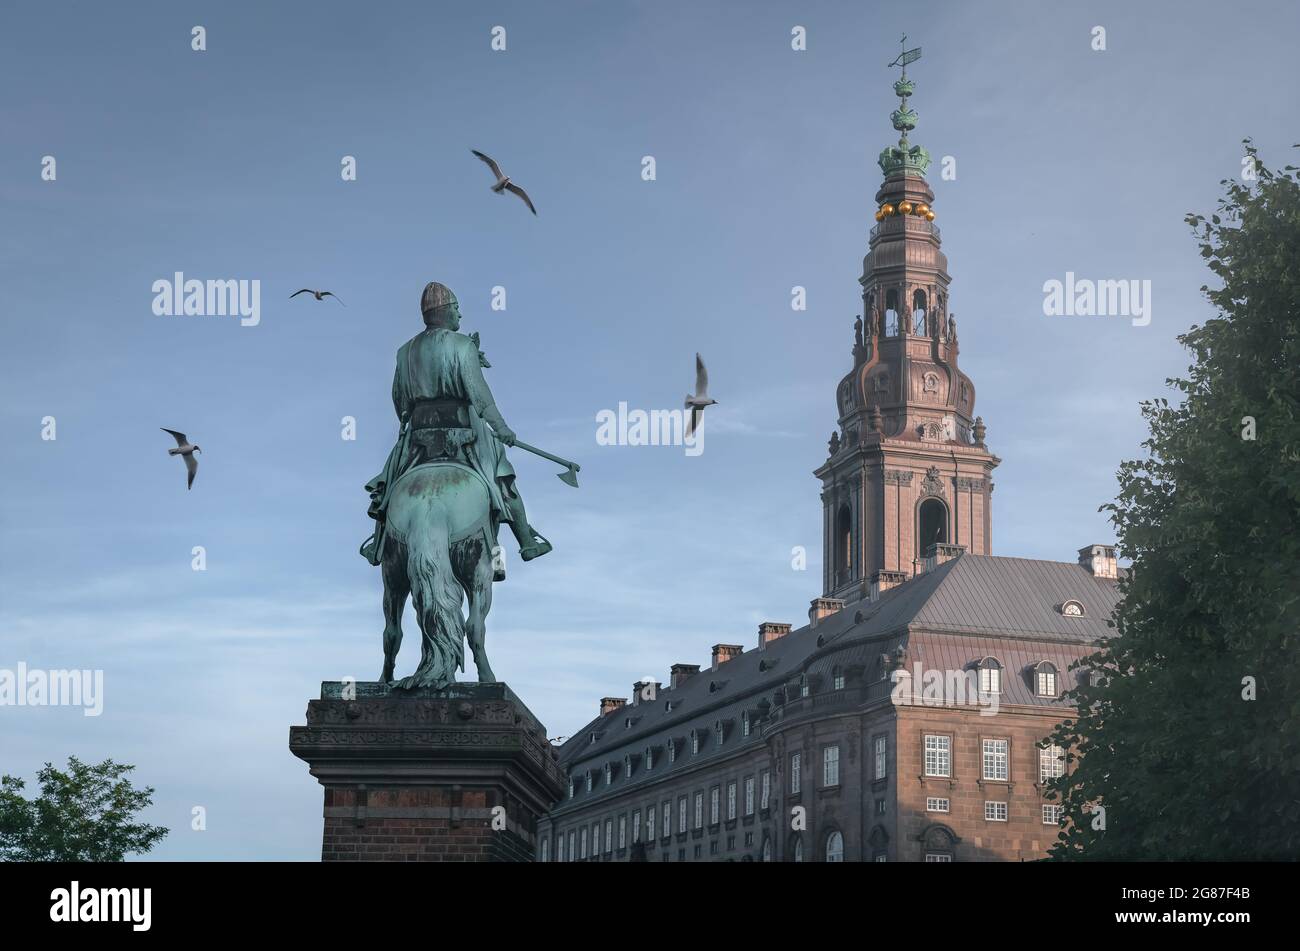 Absalon Statue on Hojbro square with Christiansborg Palace on background - Copenhagen, Denmark Stock Photo